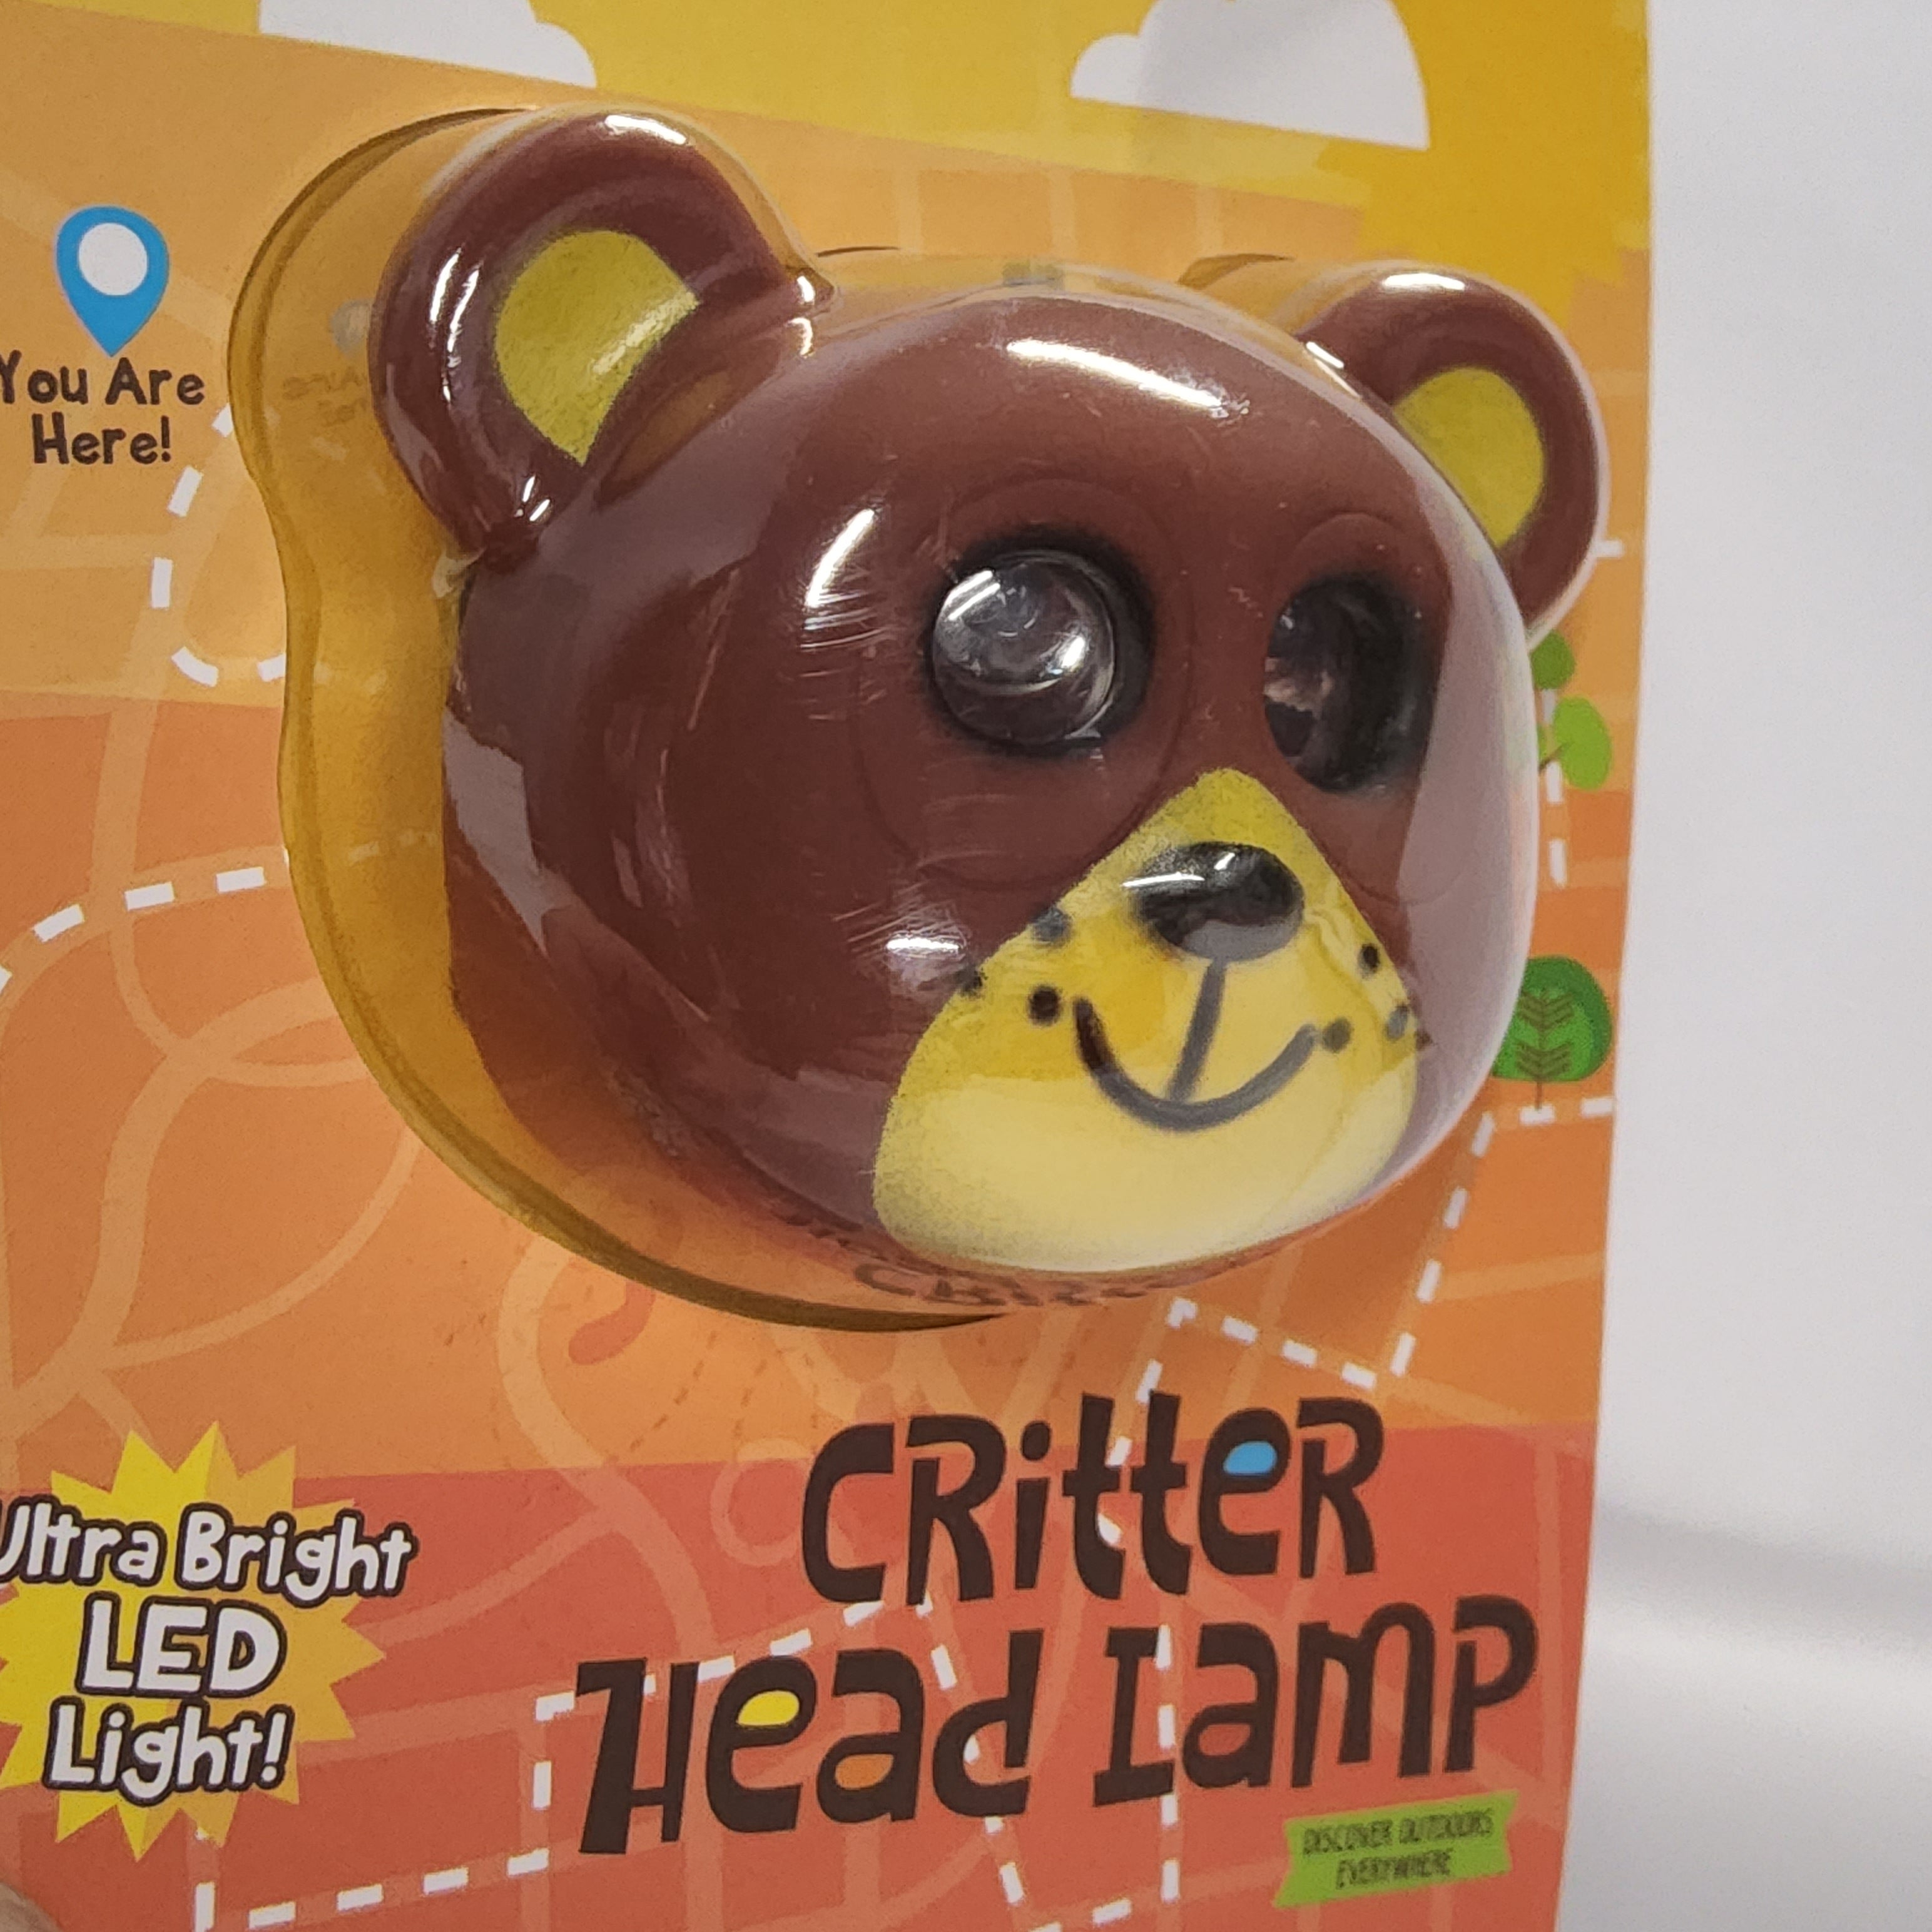 Critter Head Lamp #9607